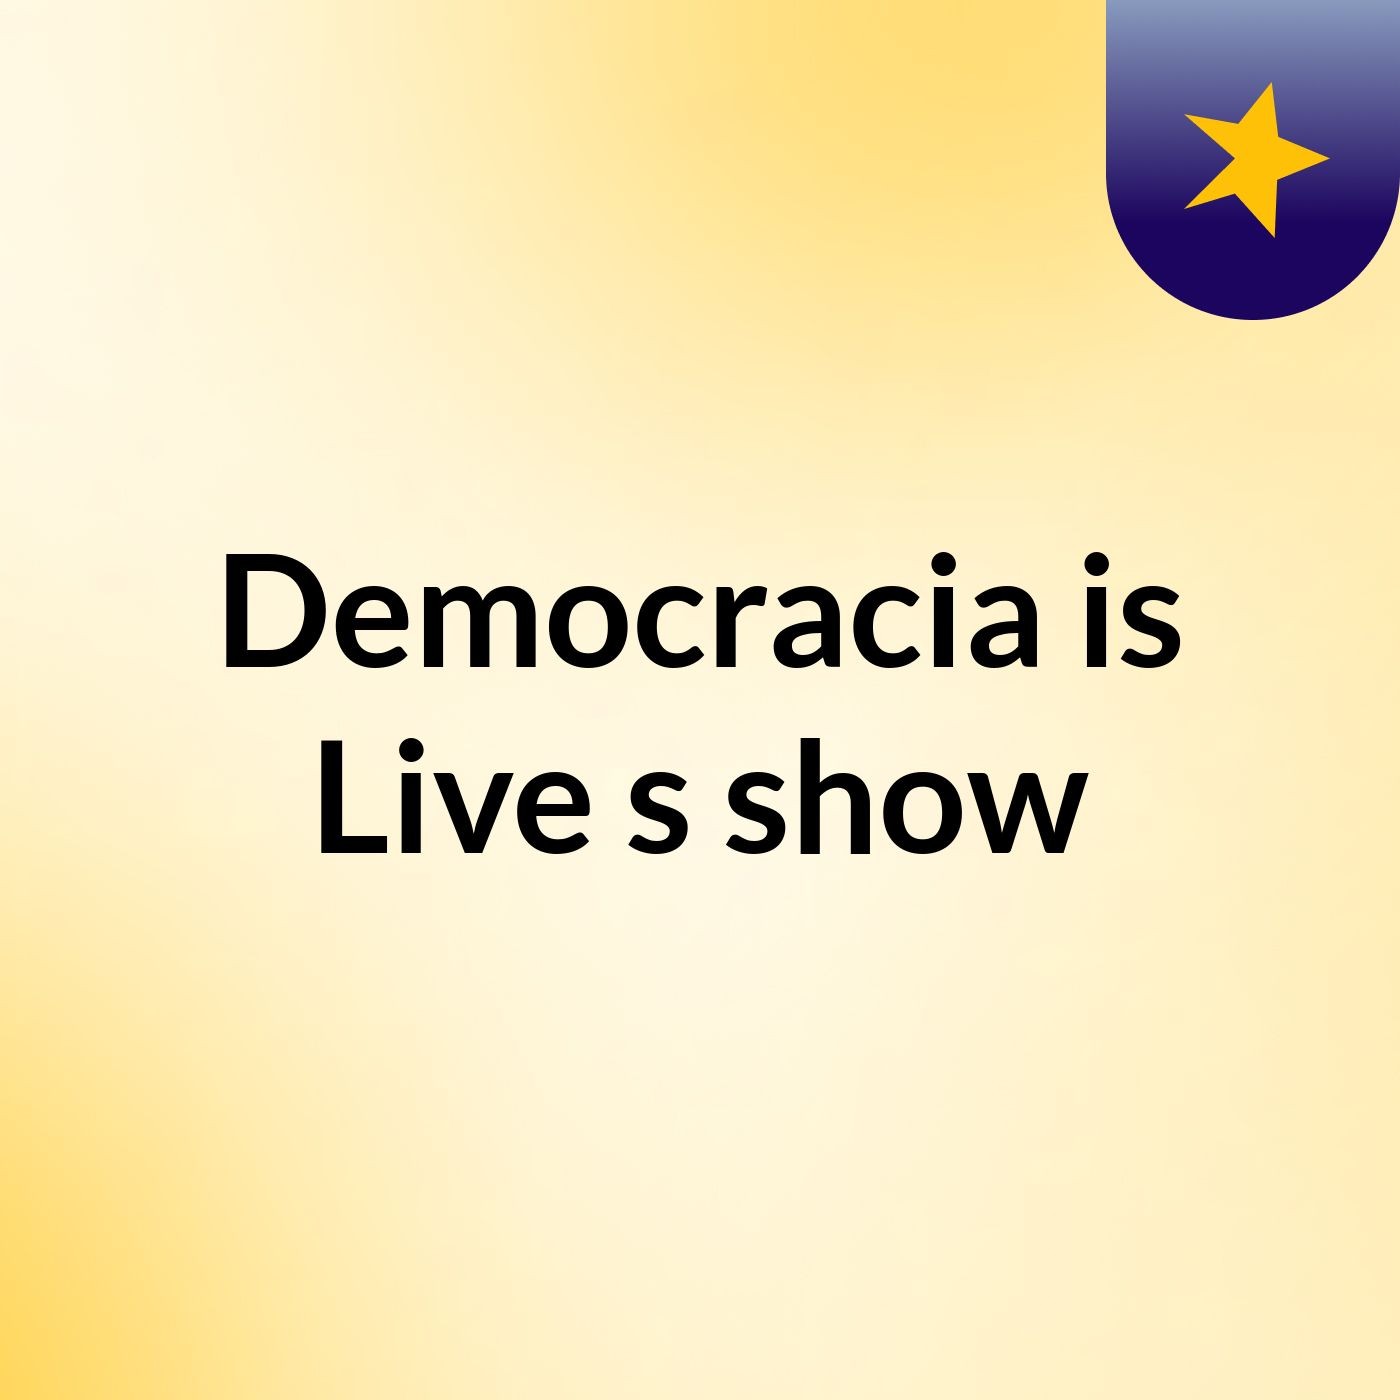 Democracia is Live's show